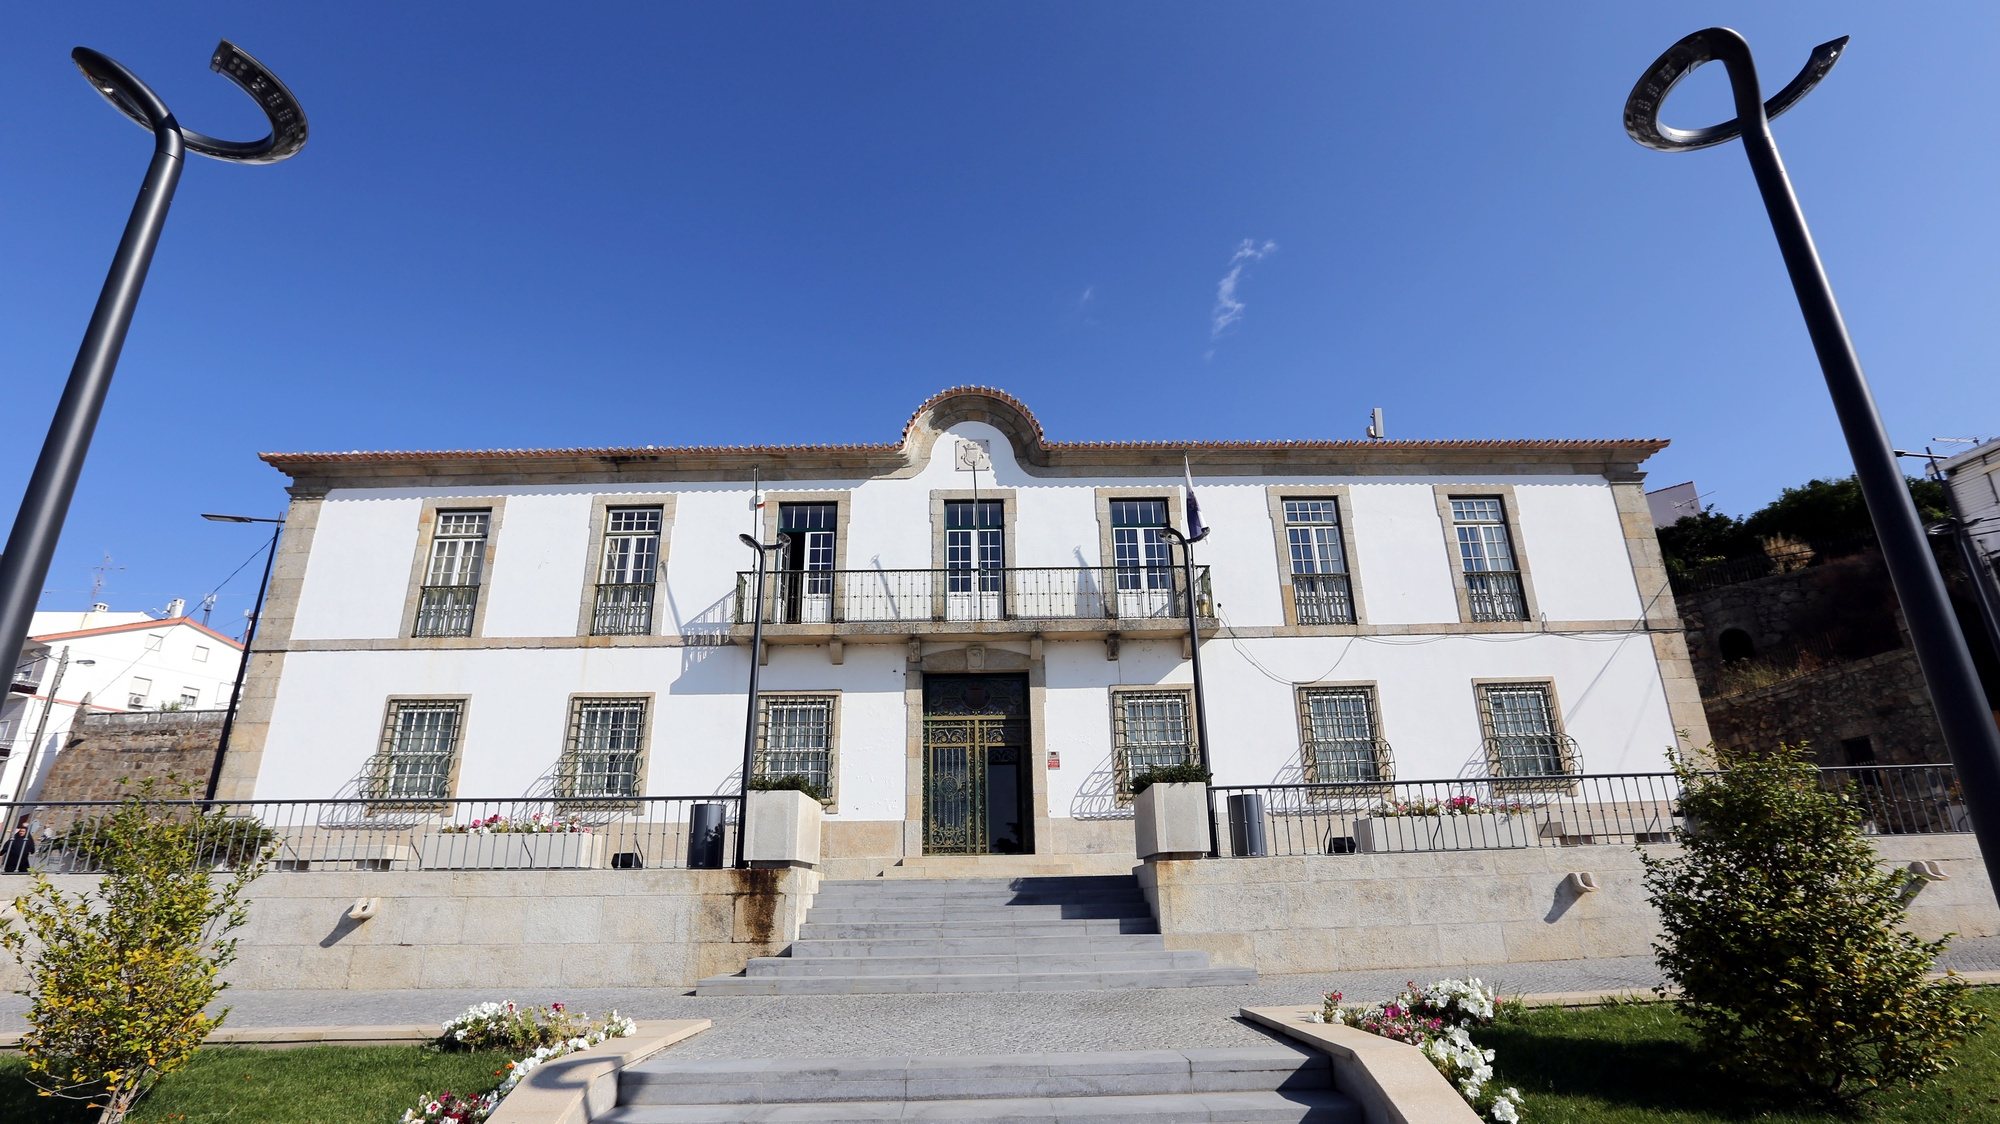 Câmara Municipal de Penamacor, 3 de outubro de 2017. ANTÓNIO JOSÉ/LUSA